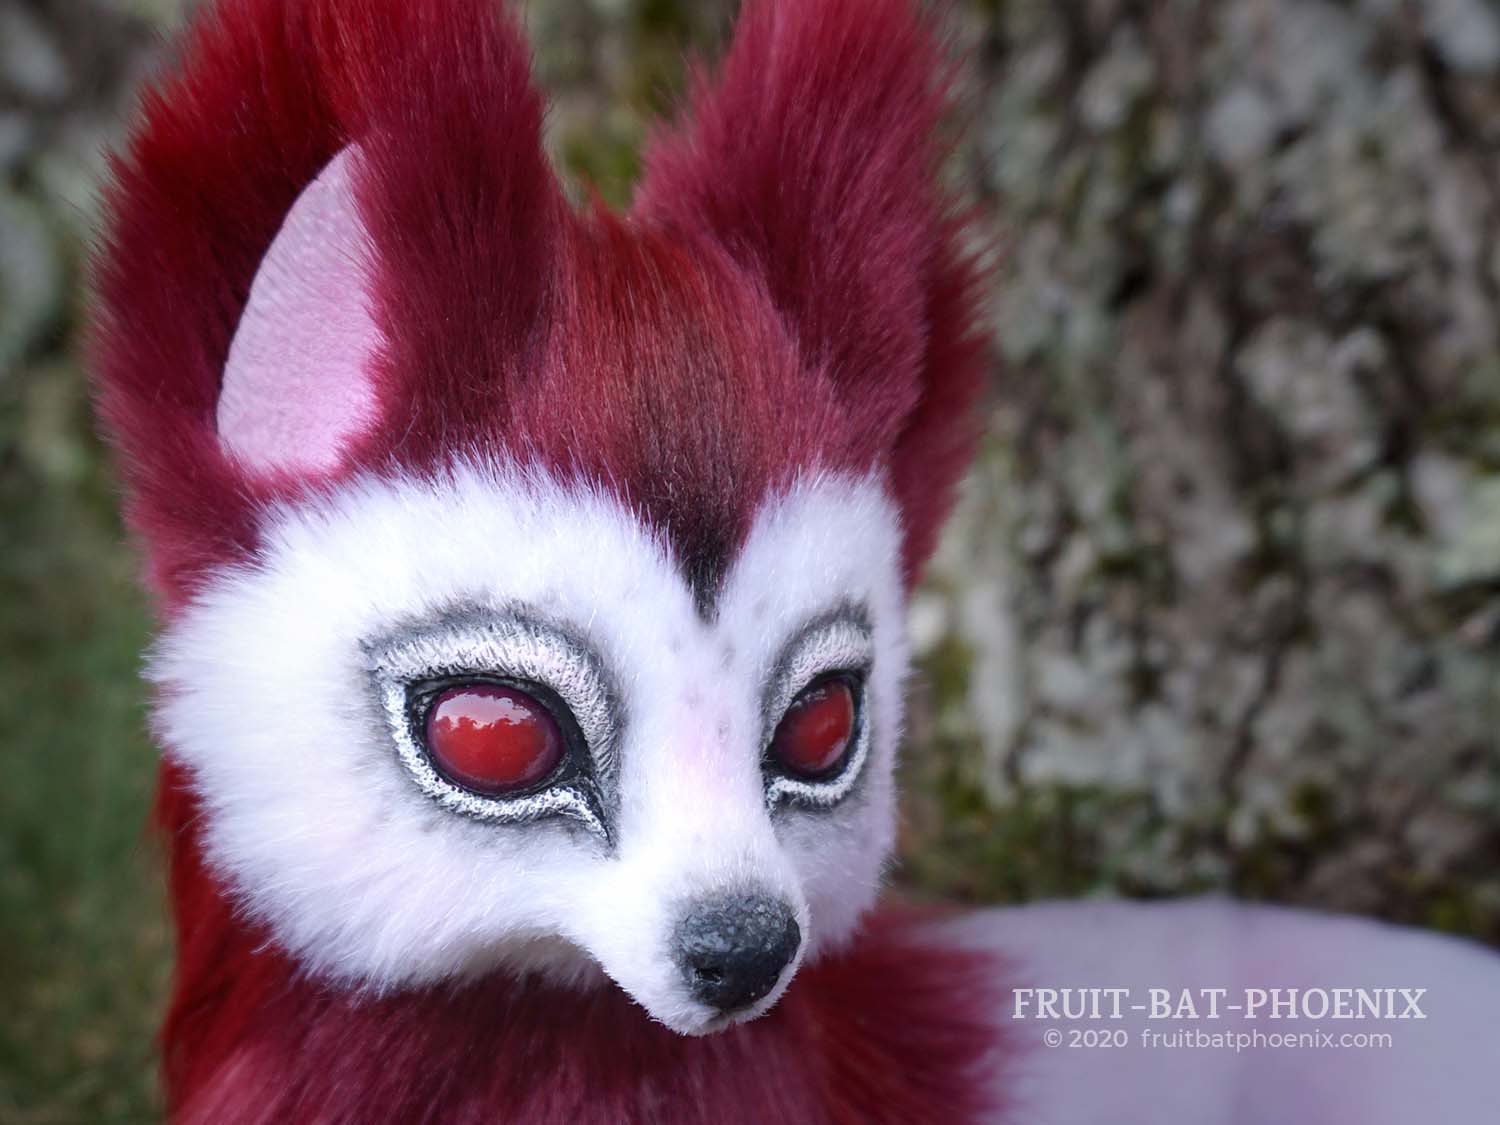 Burgundy & white kitsune with red eyes